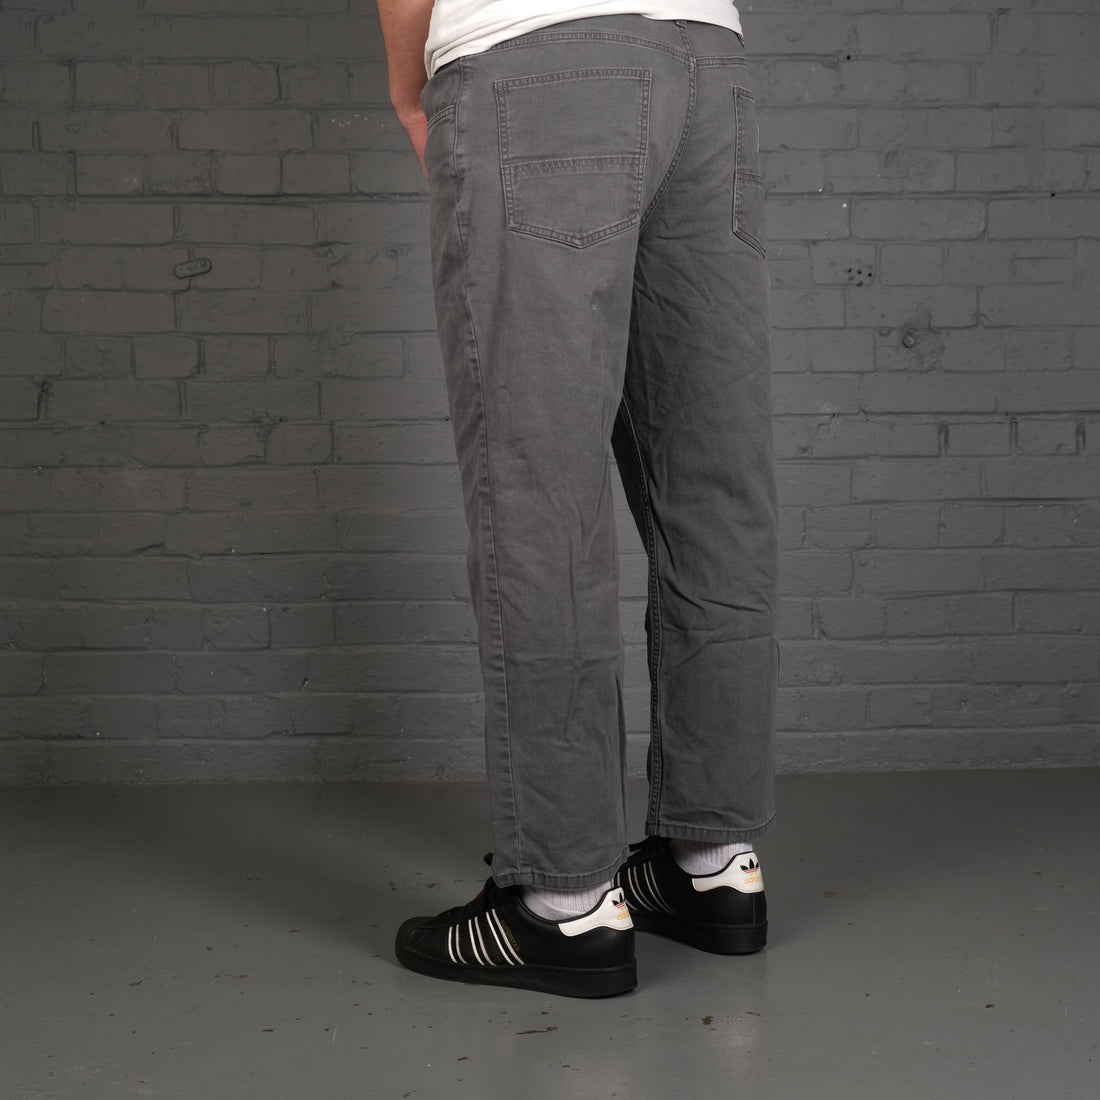 Vintage Carhartt Carpenter jeans in Grey